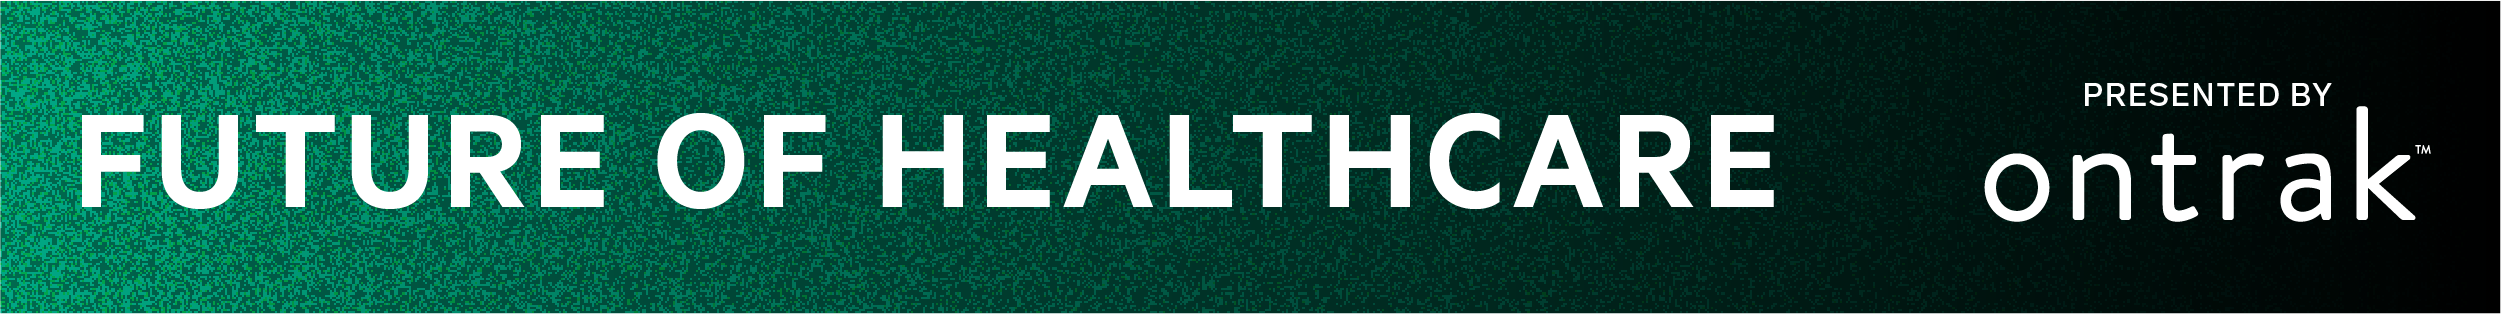 Future of Healthcare banner